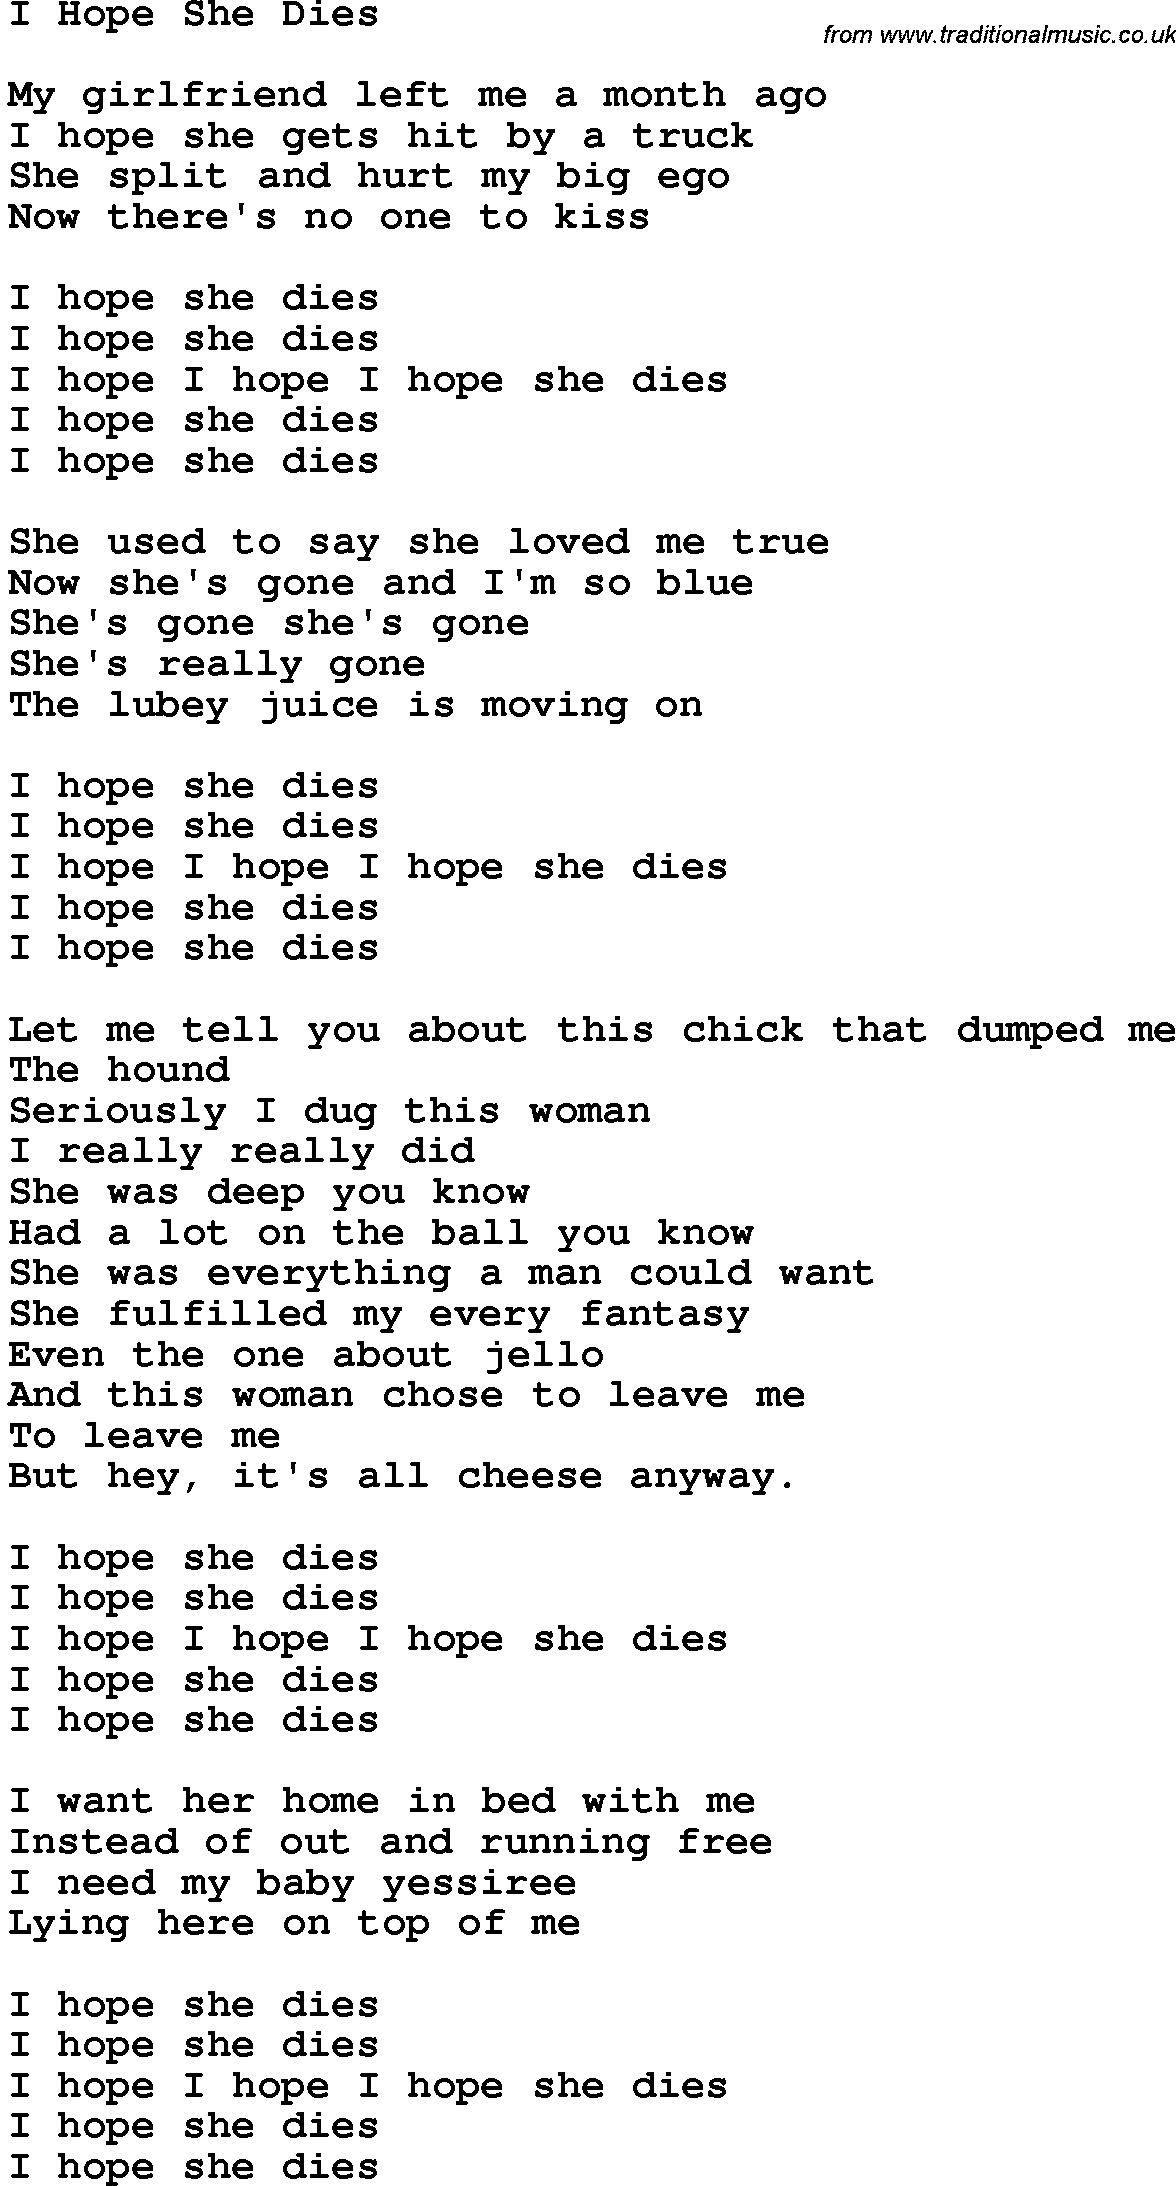 Novelty song: I Hope She Dies lyrics